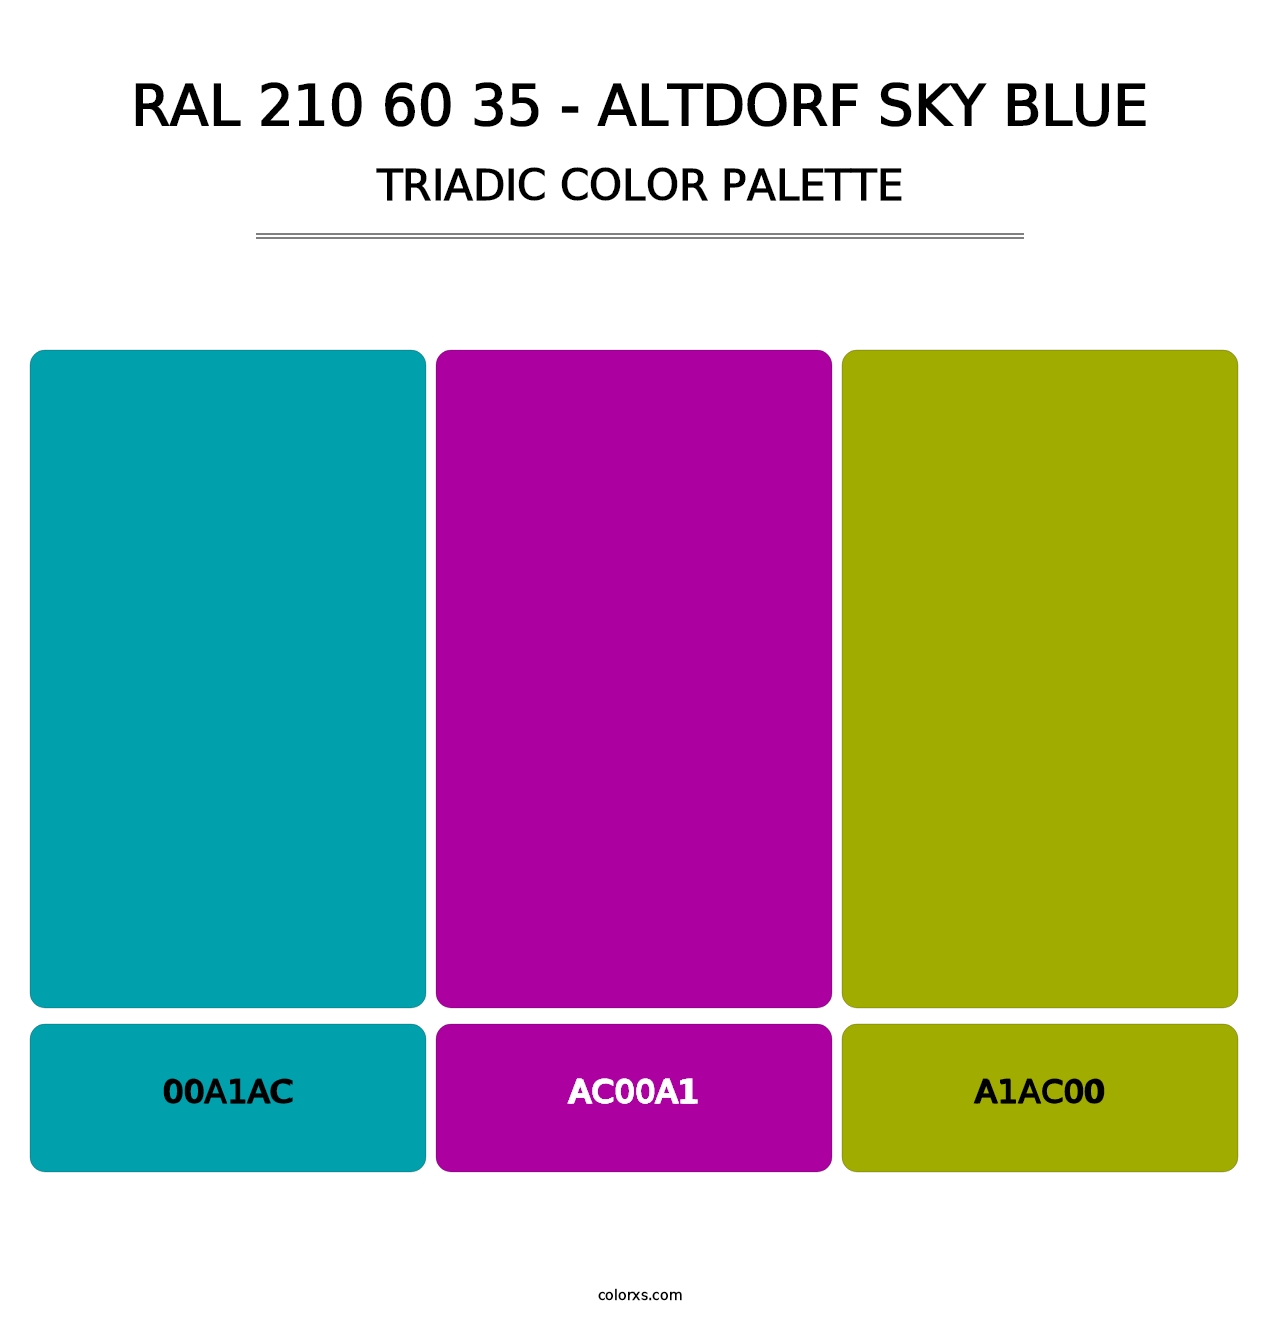 RAL 210 60 35 - Altdorf Sky Blue - Triadic Color Palette